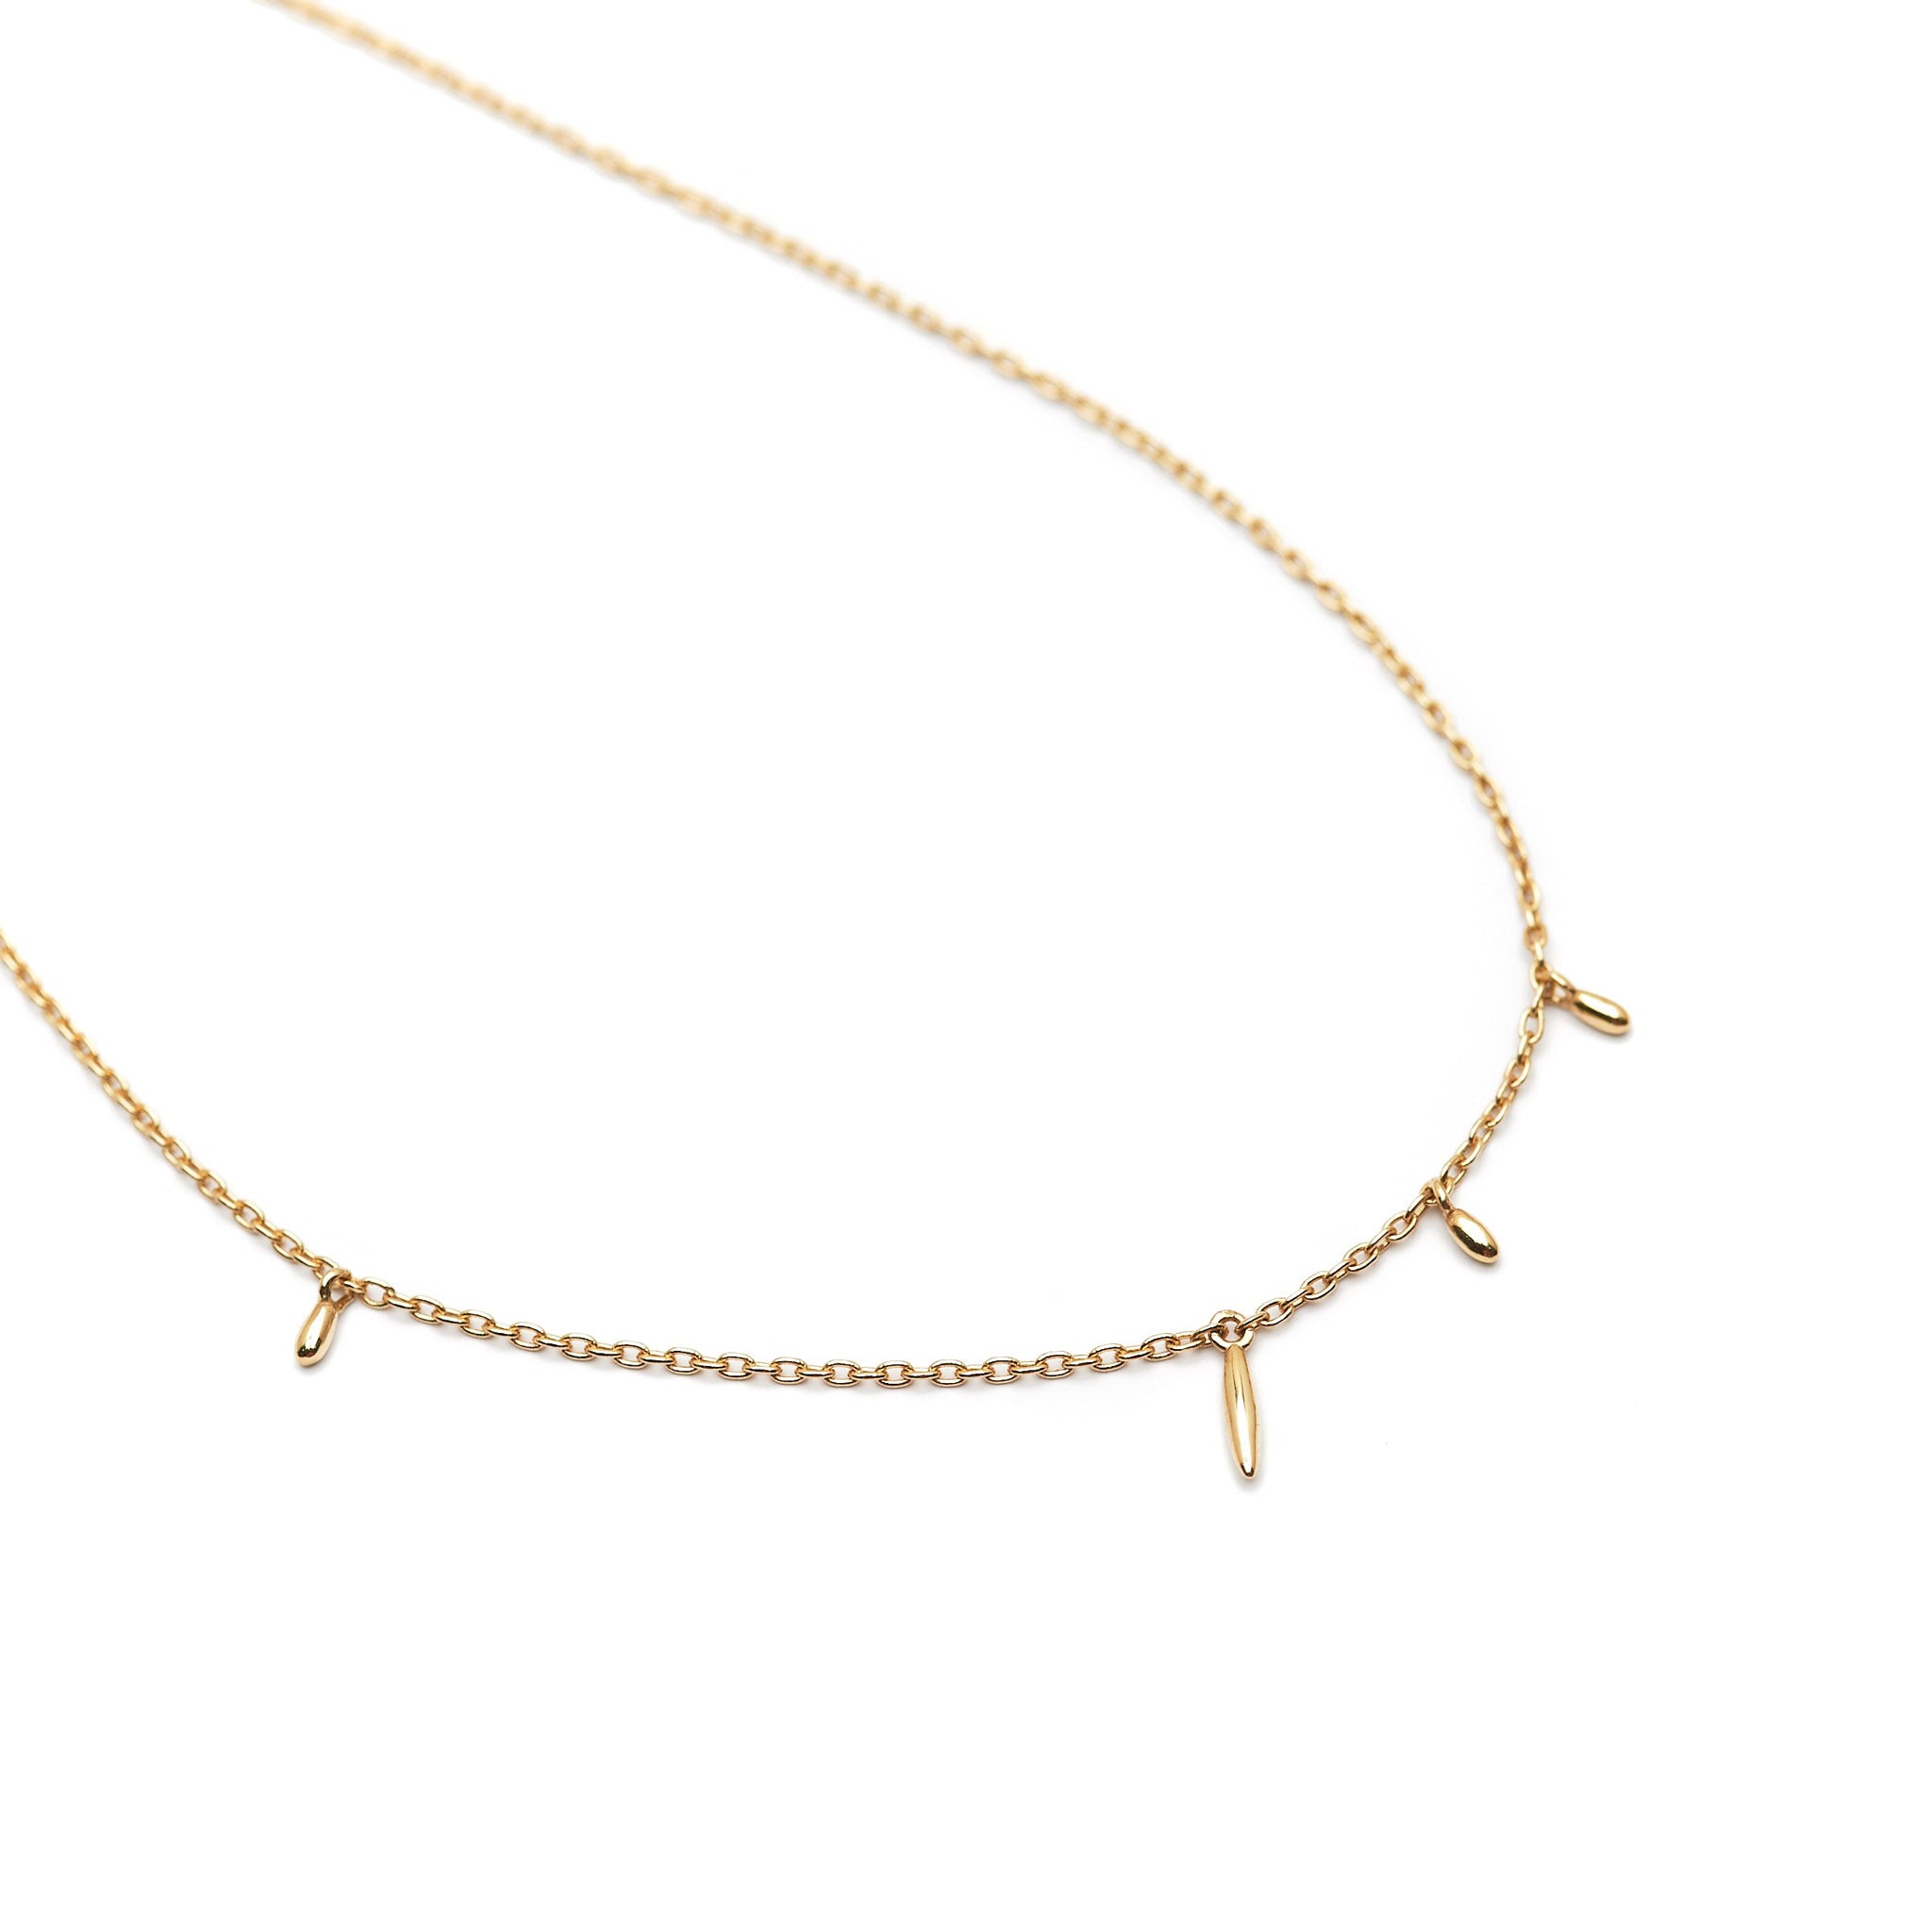 Minimalist solid 14k gold necklace. Delicate fine jewelry.